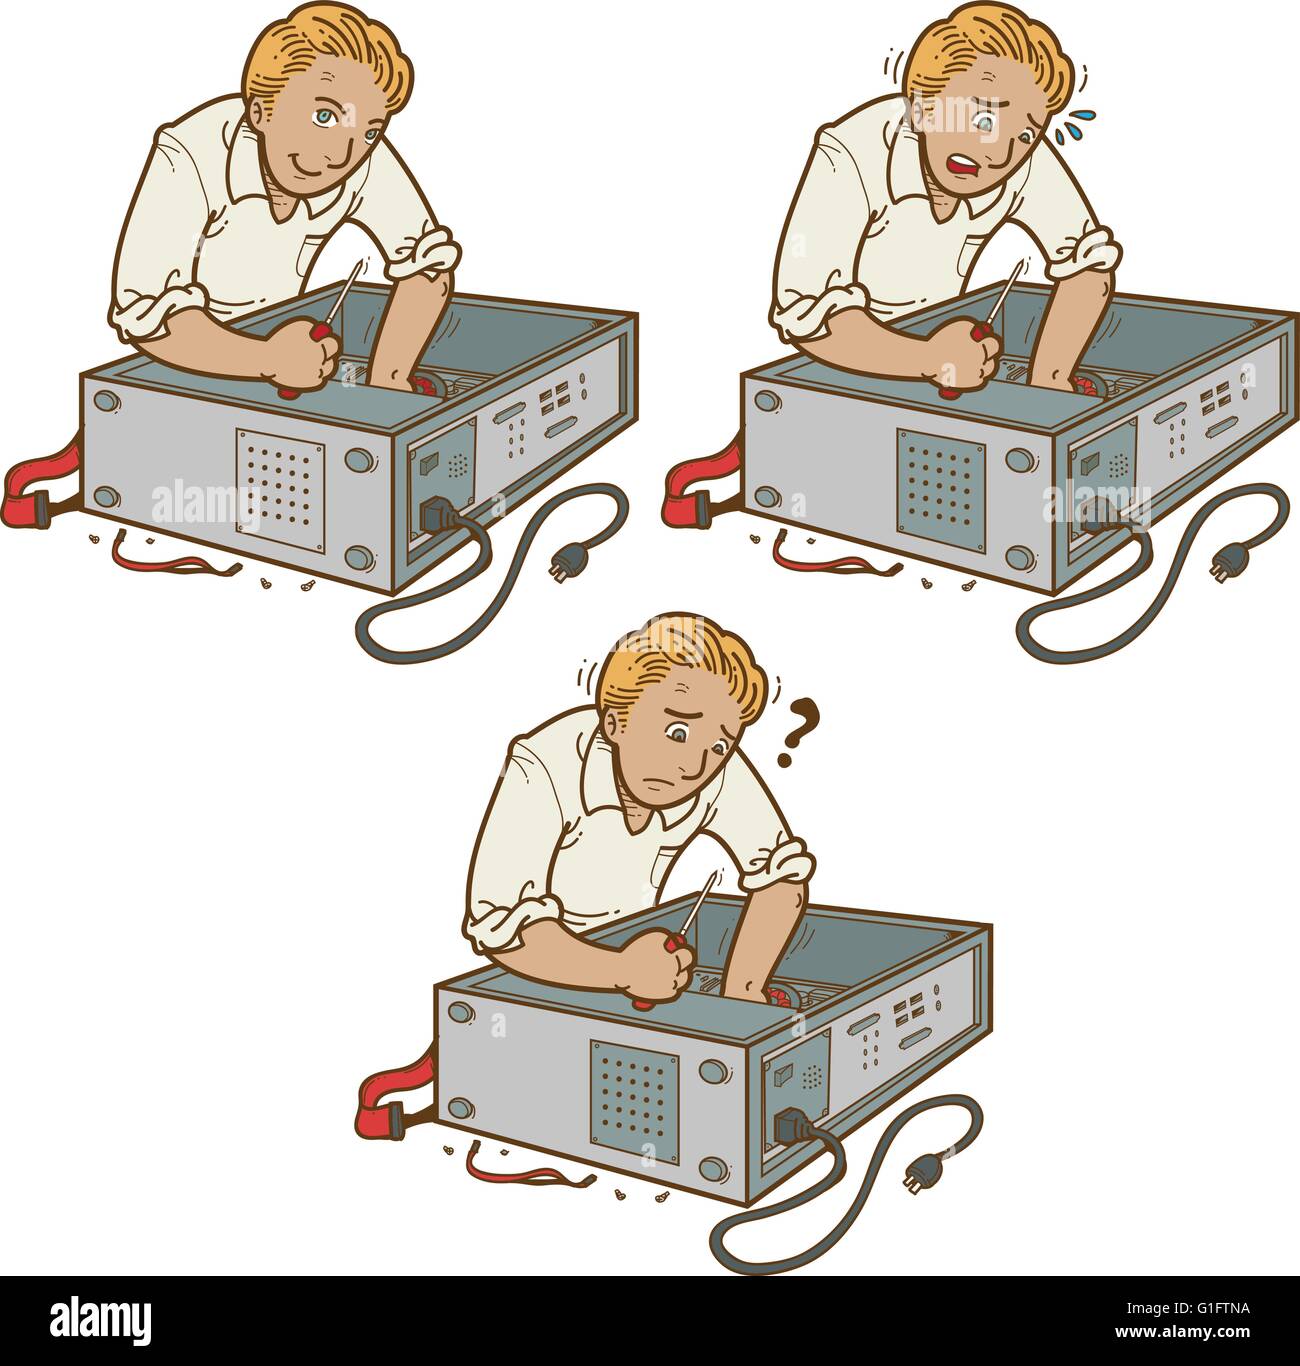 Vector illustration of man fixing PC Illustration de Vecteur